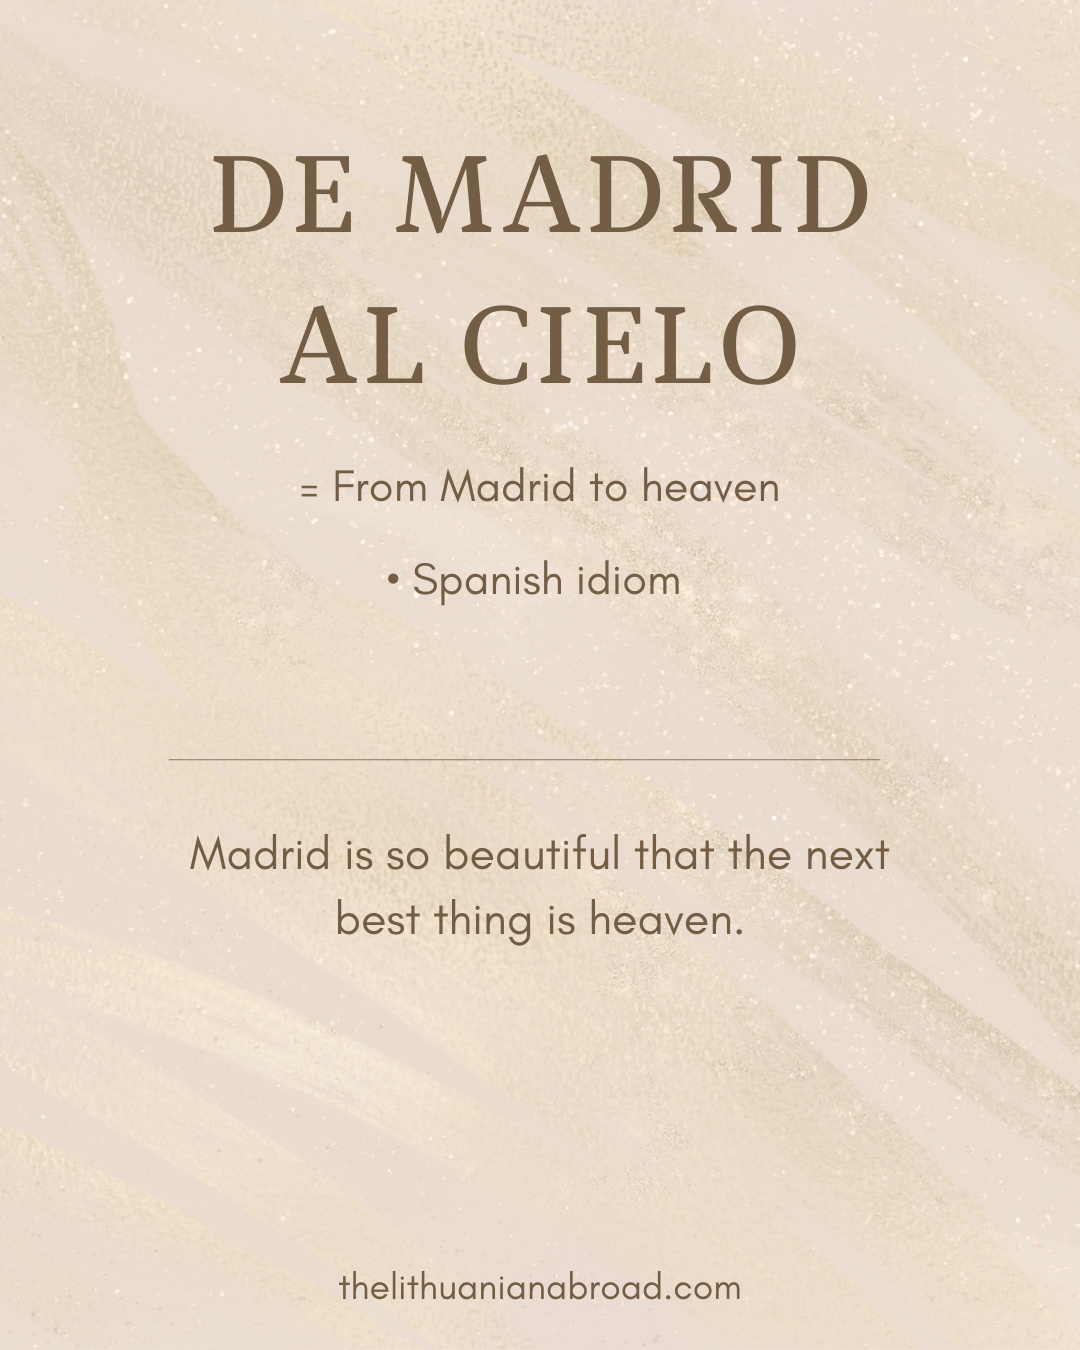 funny Spanish sayings de madrid al cielo meaning